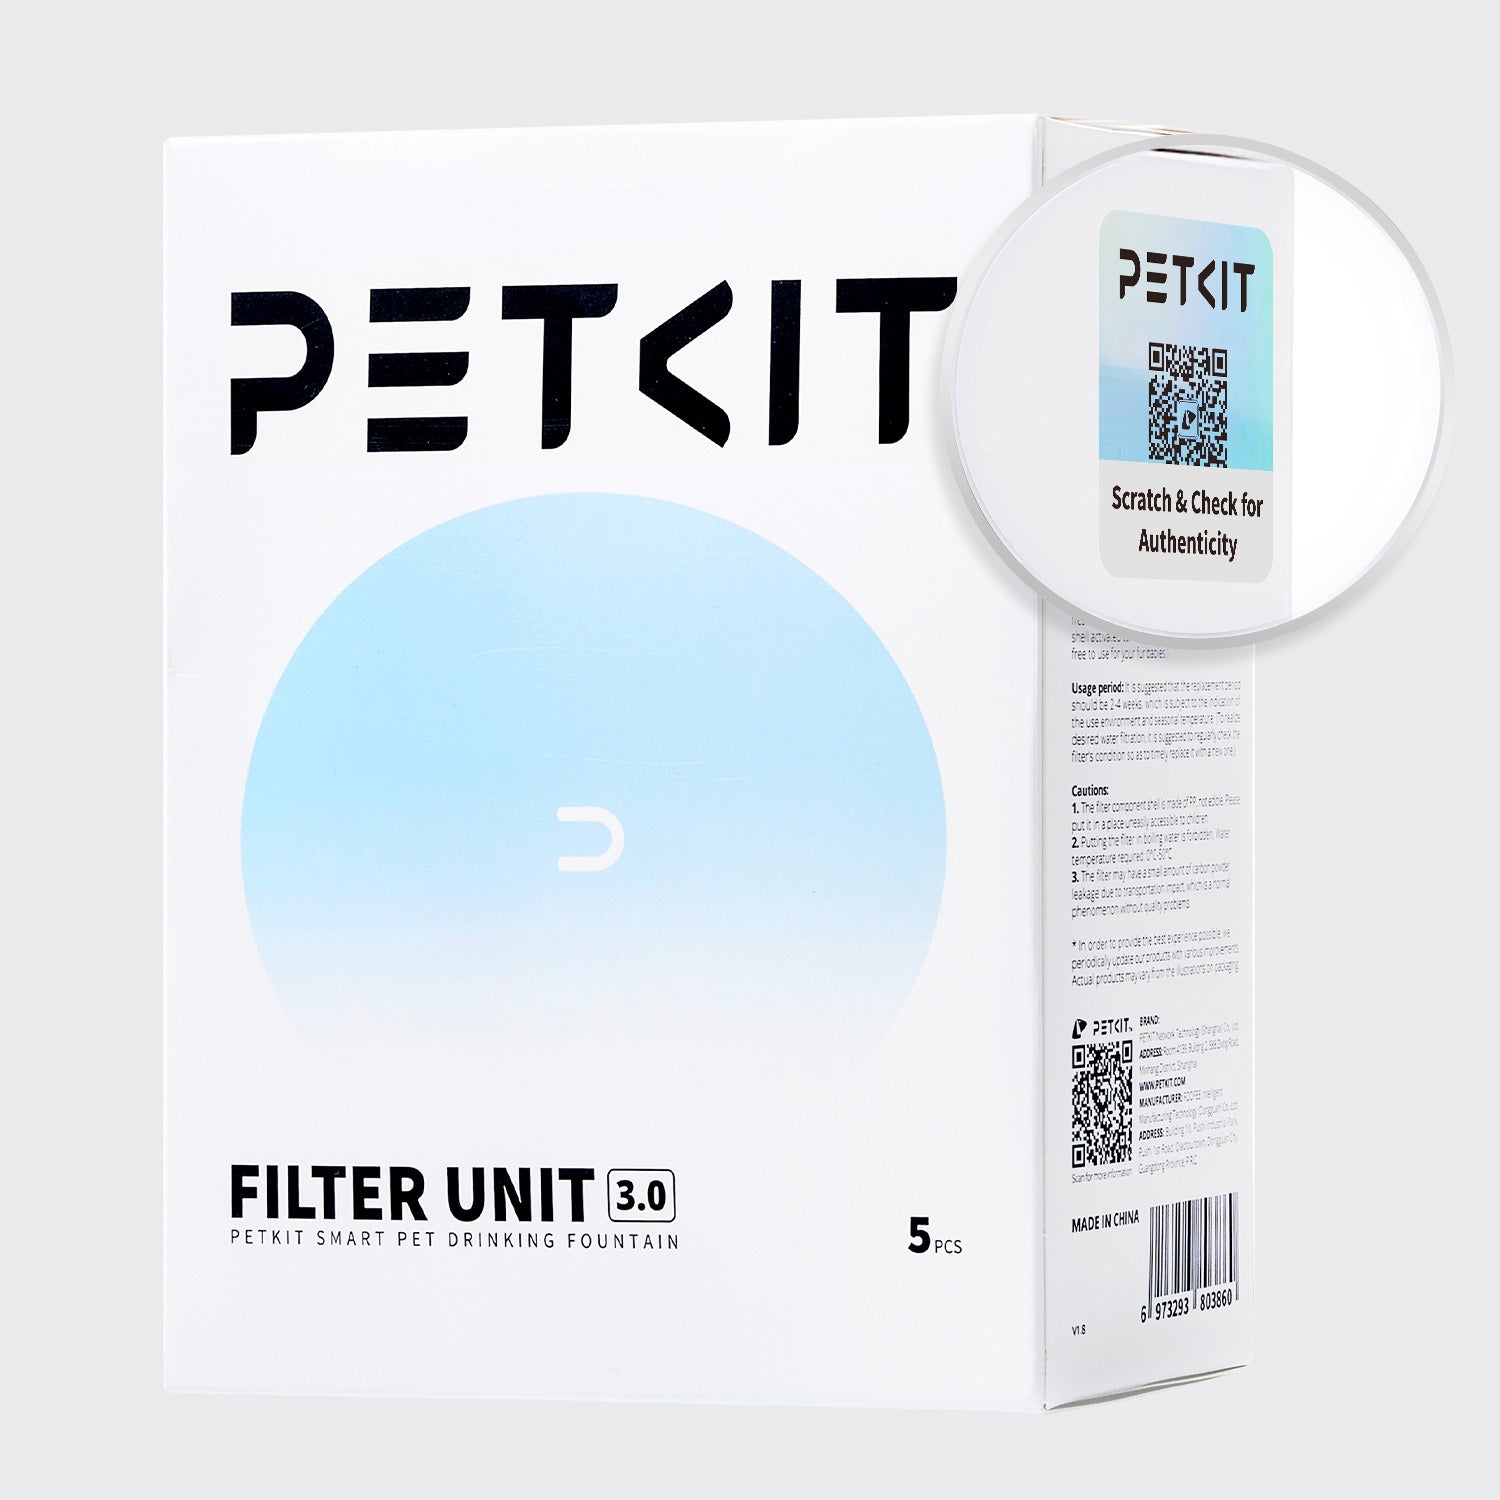 PETKIT Filter Unit 3.0